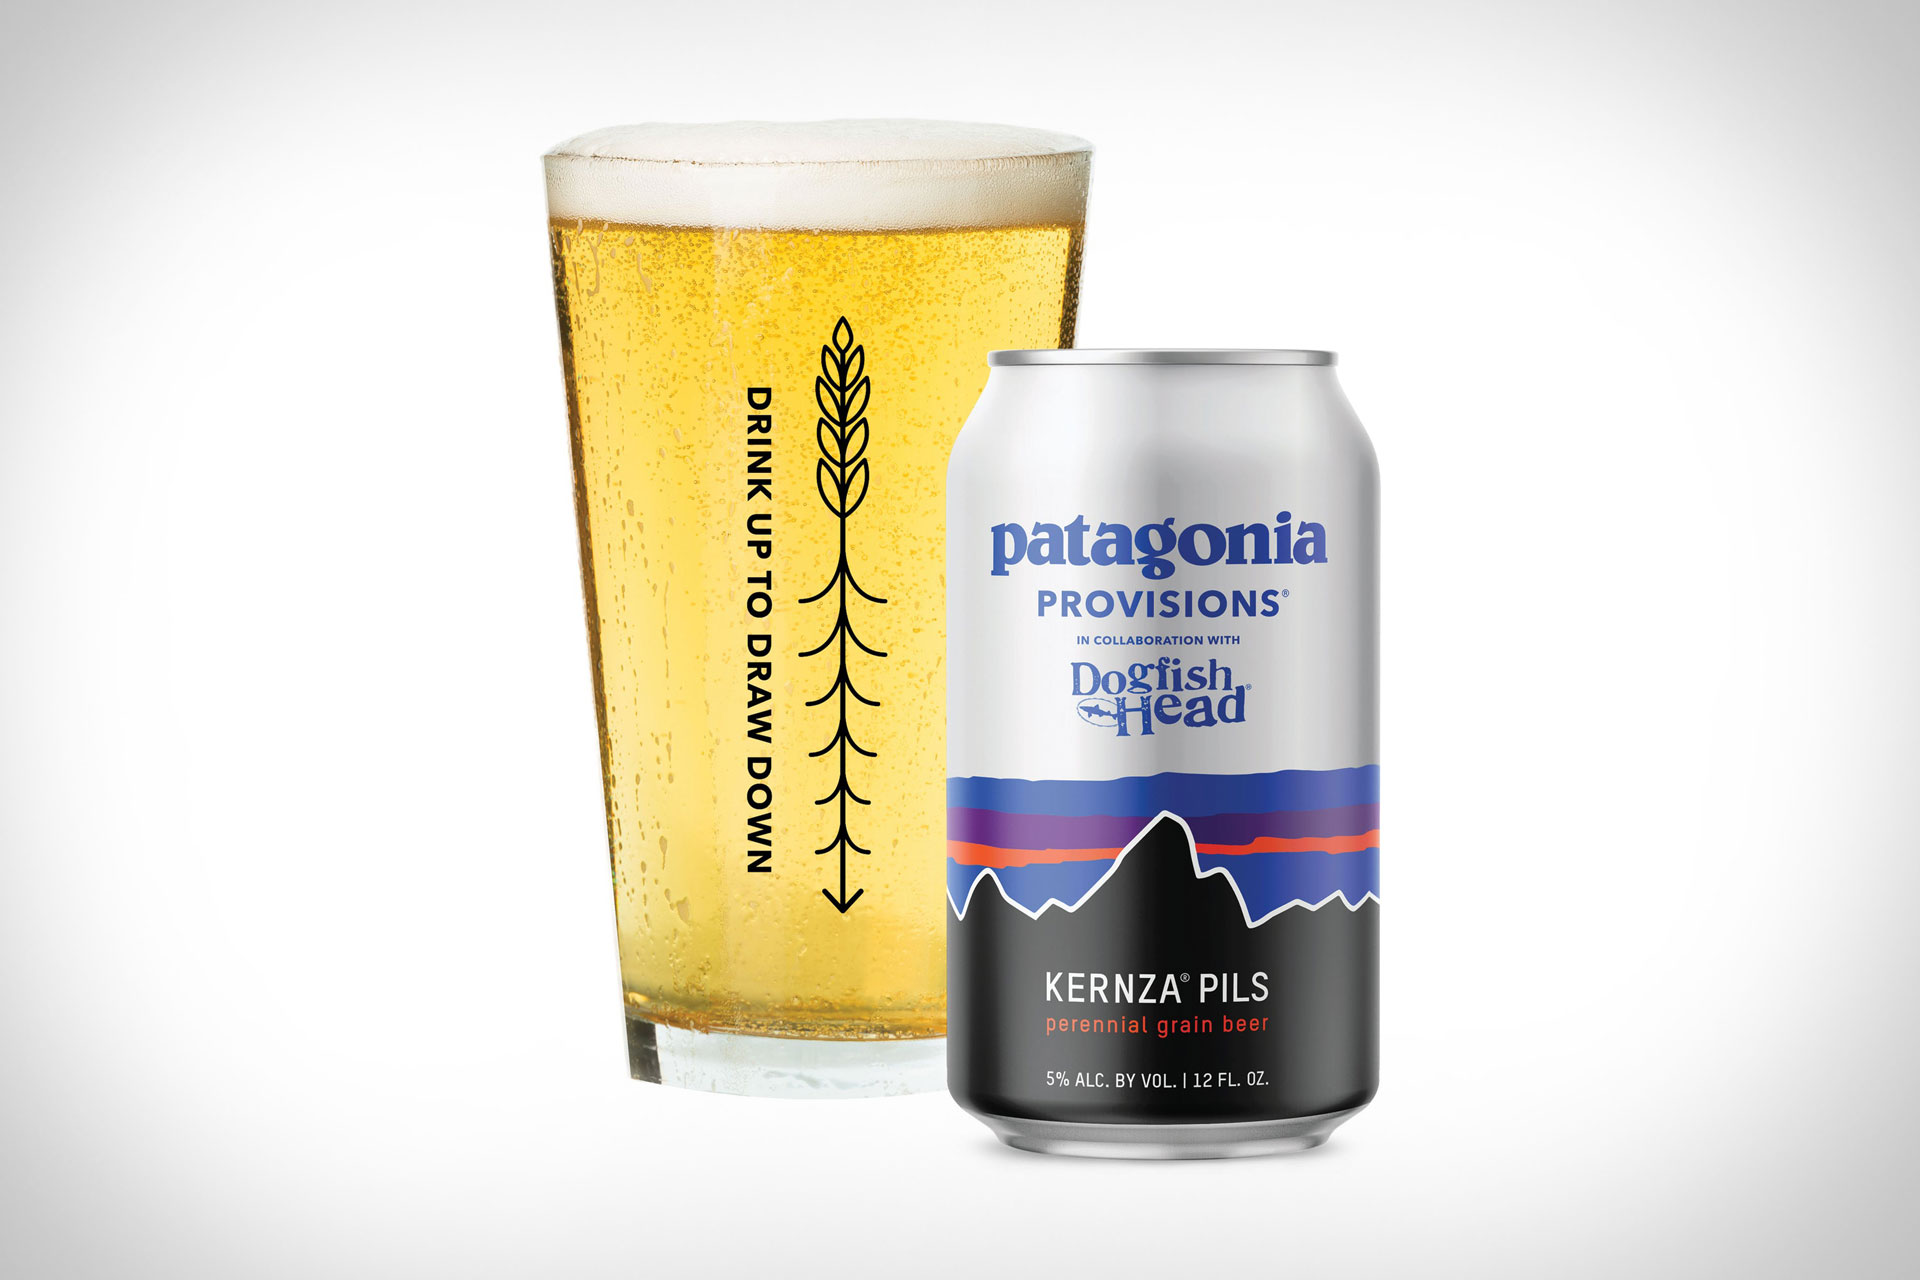 Patagonia x Dogfish Head Kernza Pils Beer